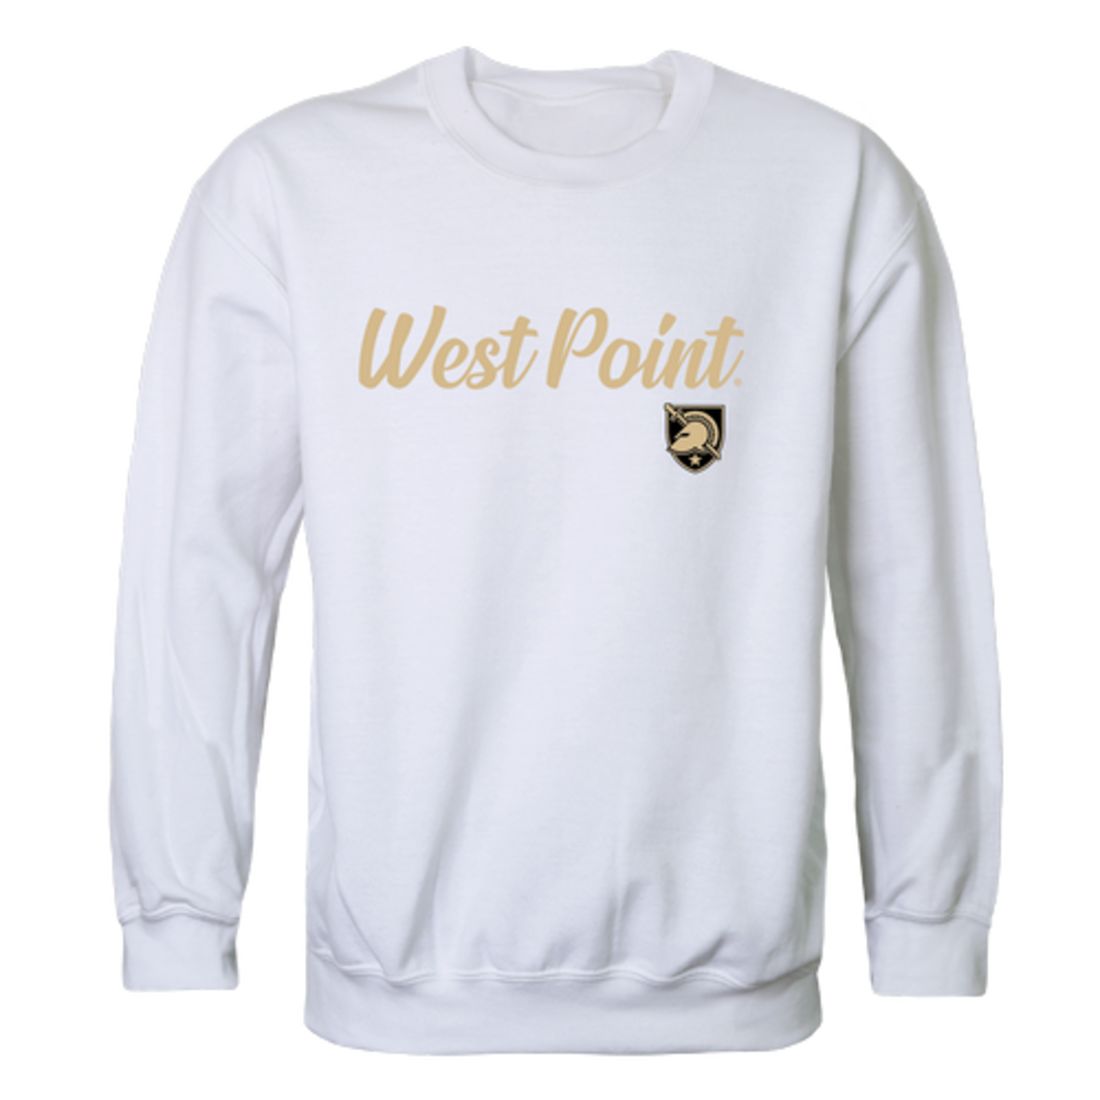 USMA United States Military Academy West Point Army Black Nights Script Crewneck Pullover Sweatshirt Sweater Black-Campus-Wardrobe